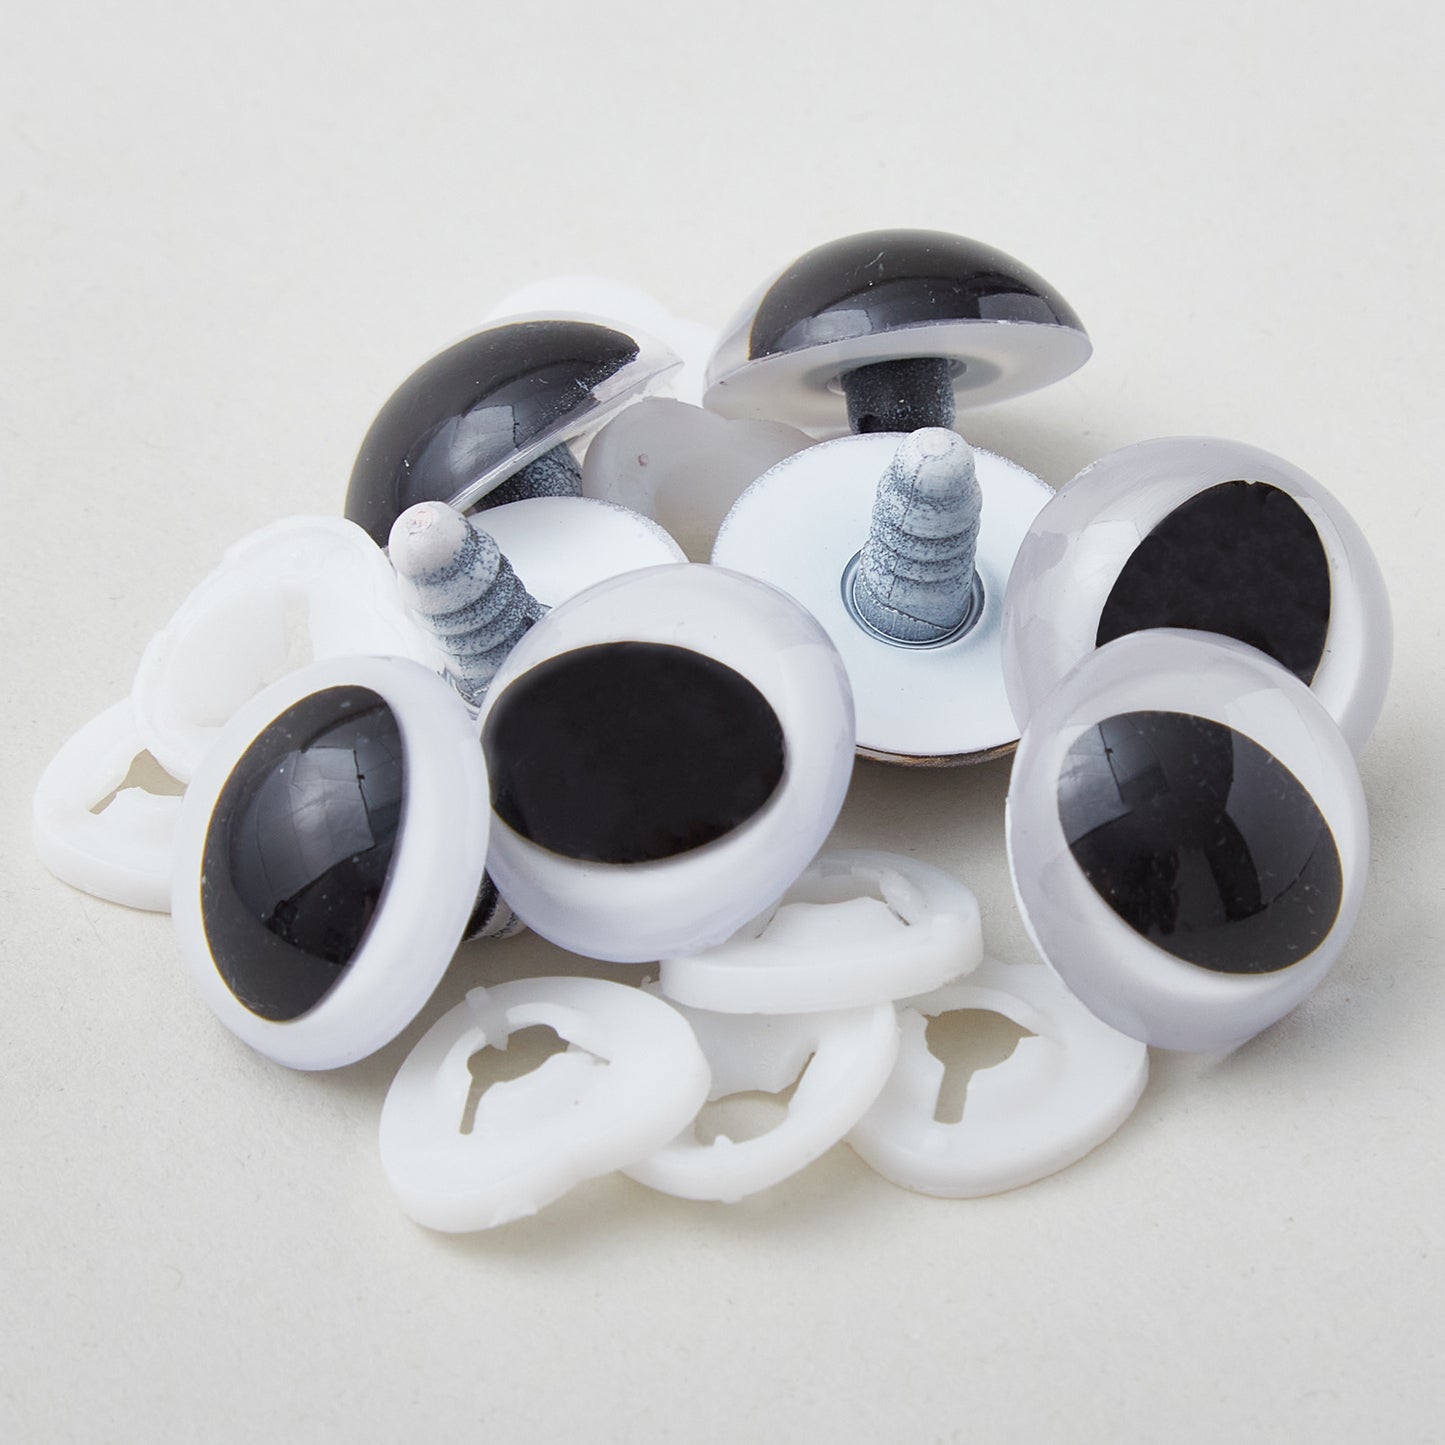 Plastic Slit Pupil Safety Eyes - 25mm White - 4 Pairs Primary Image